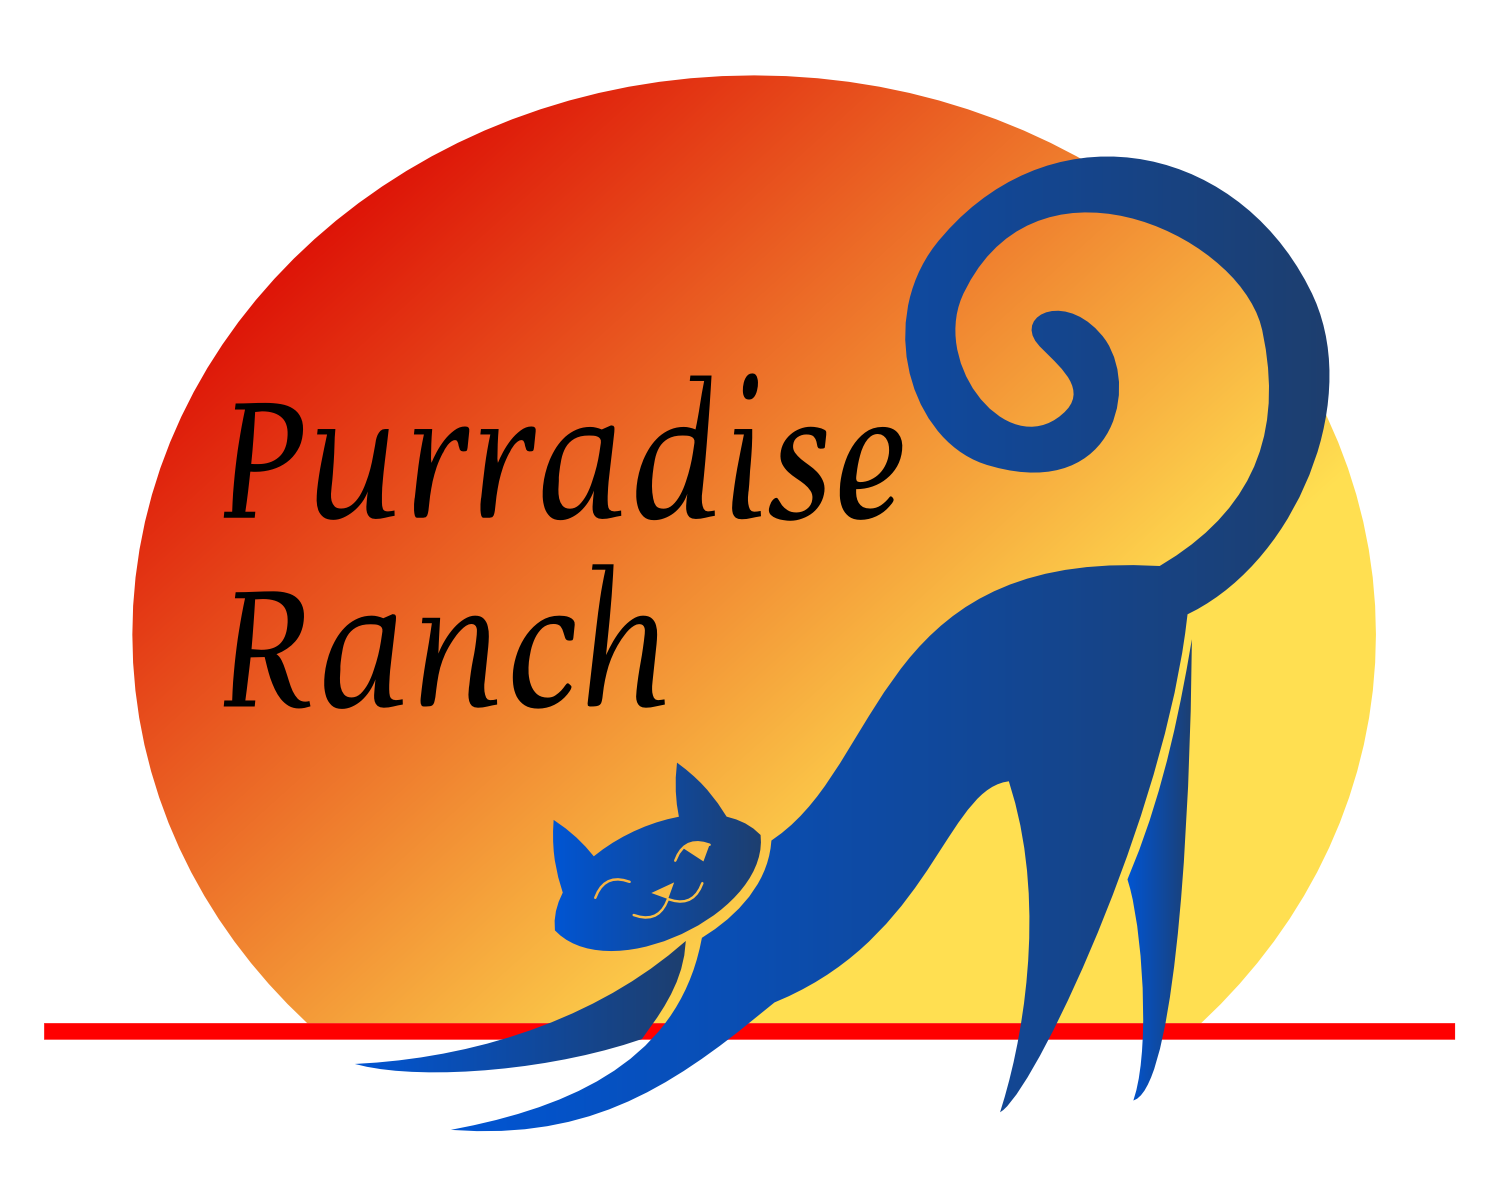 Purradise Ranch, Inc.